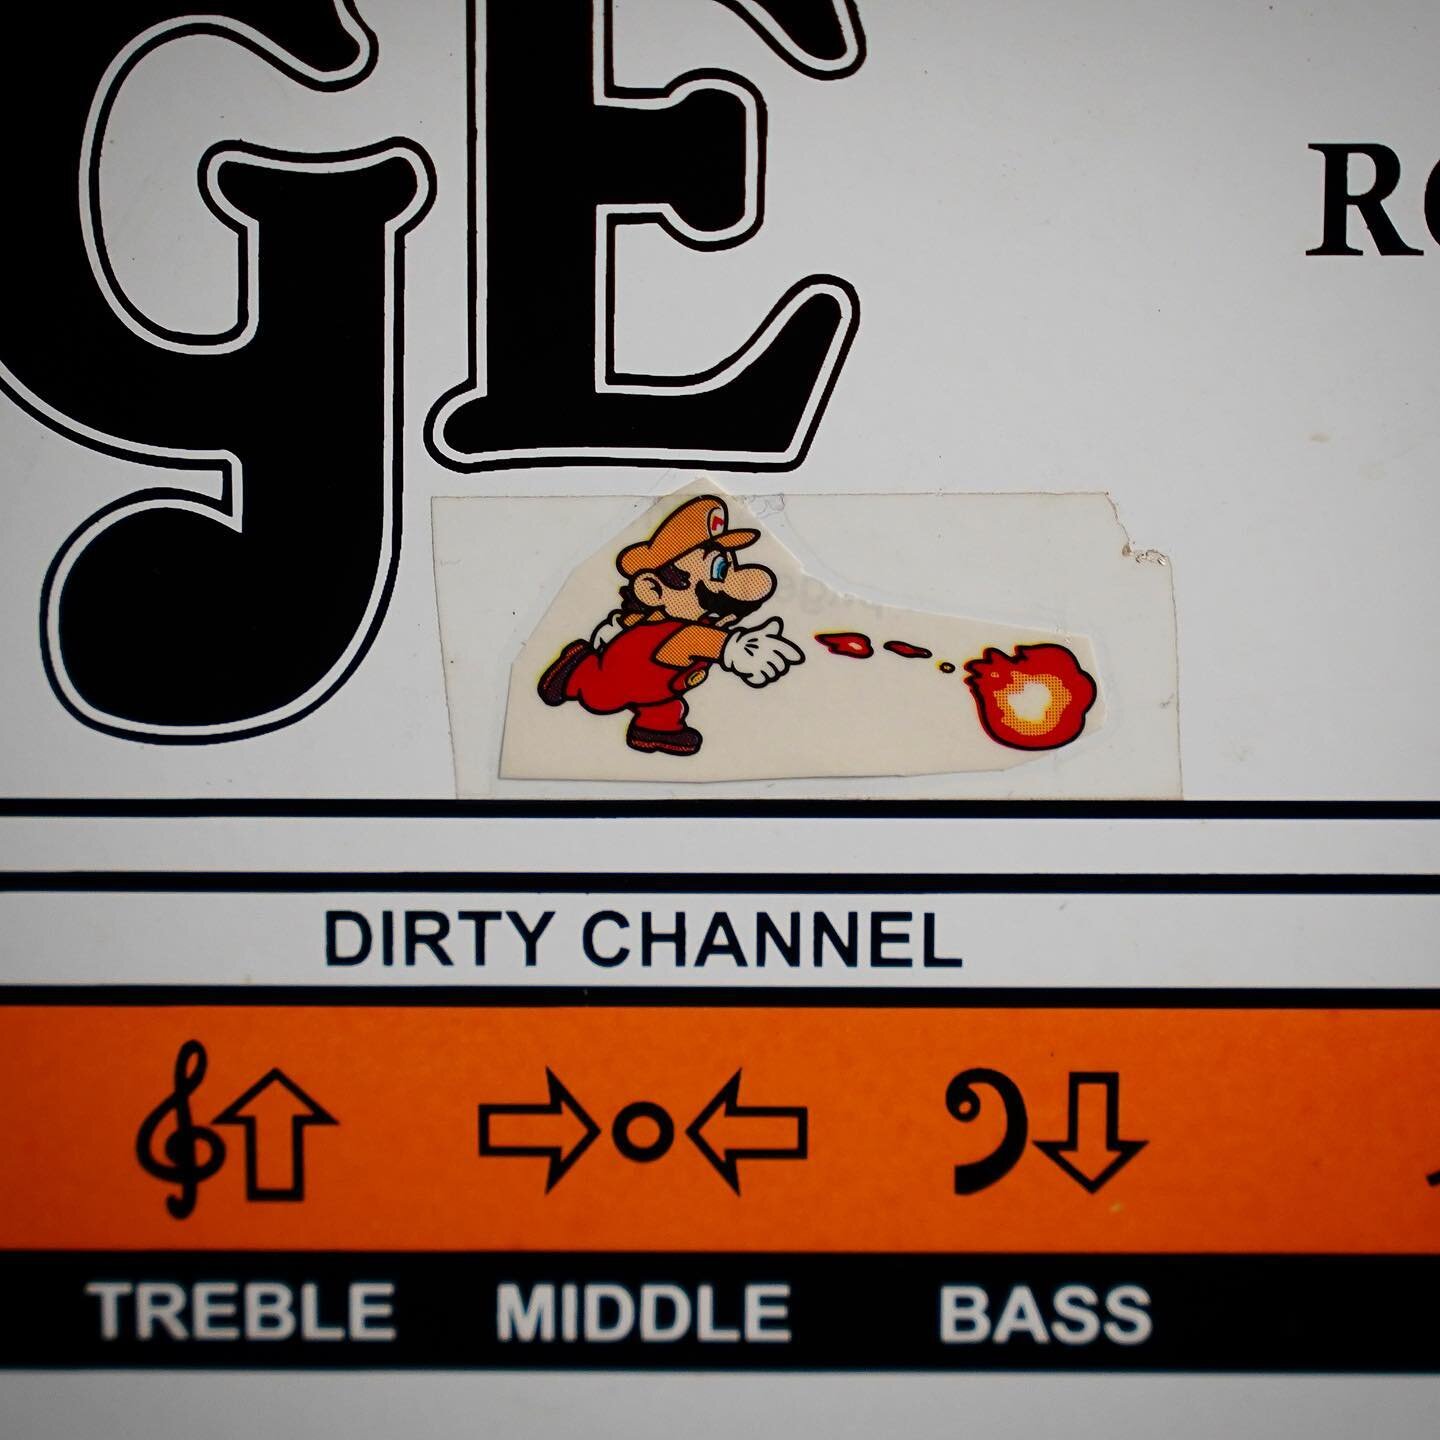 🔥🔥🔥🔥🔥
&bull;
&bull;
&bull;
#orange #rockerverb #mario #fireball #fire #orangeamps #supermario #nintendo #rock #recording #recordingstudio #guitar #dmv #dmvmusic #maryland #gearporn #rigsofdoom